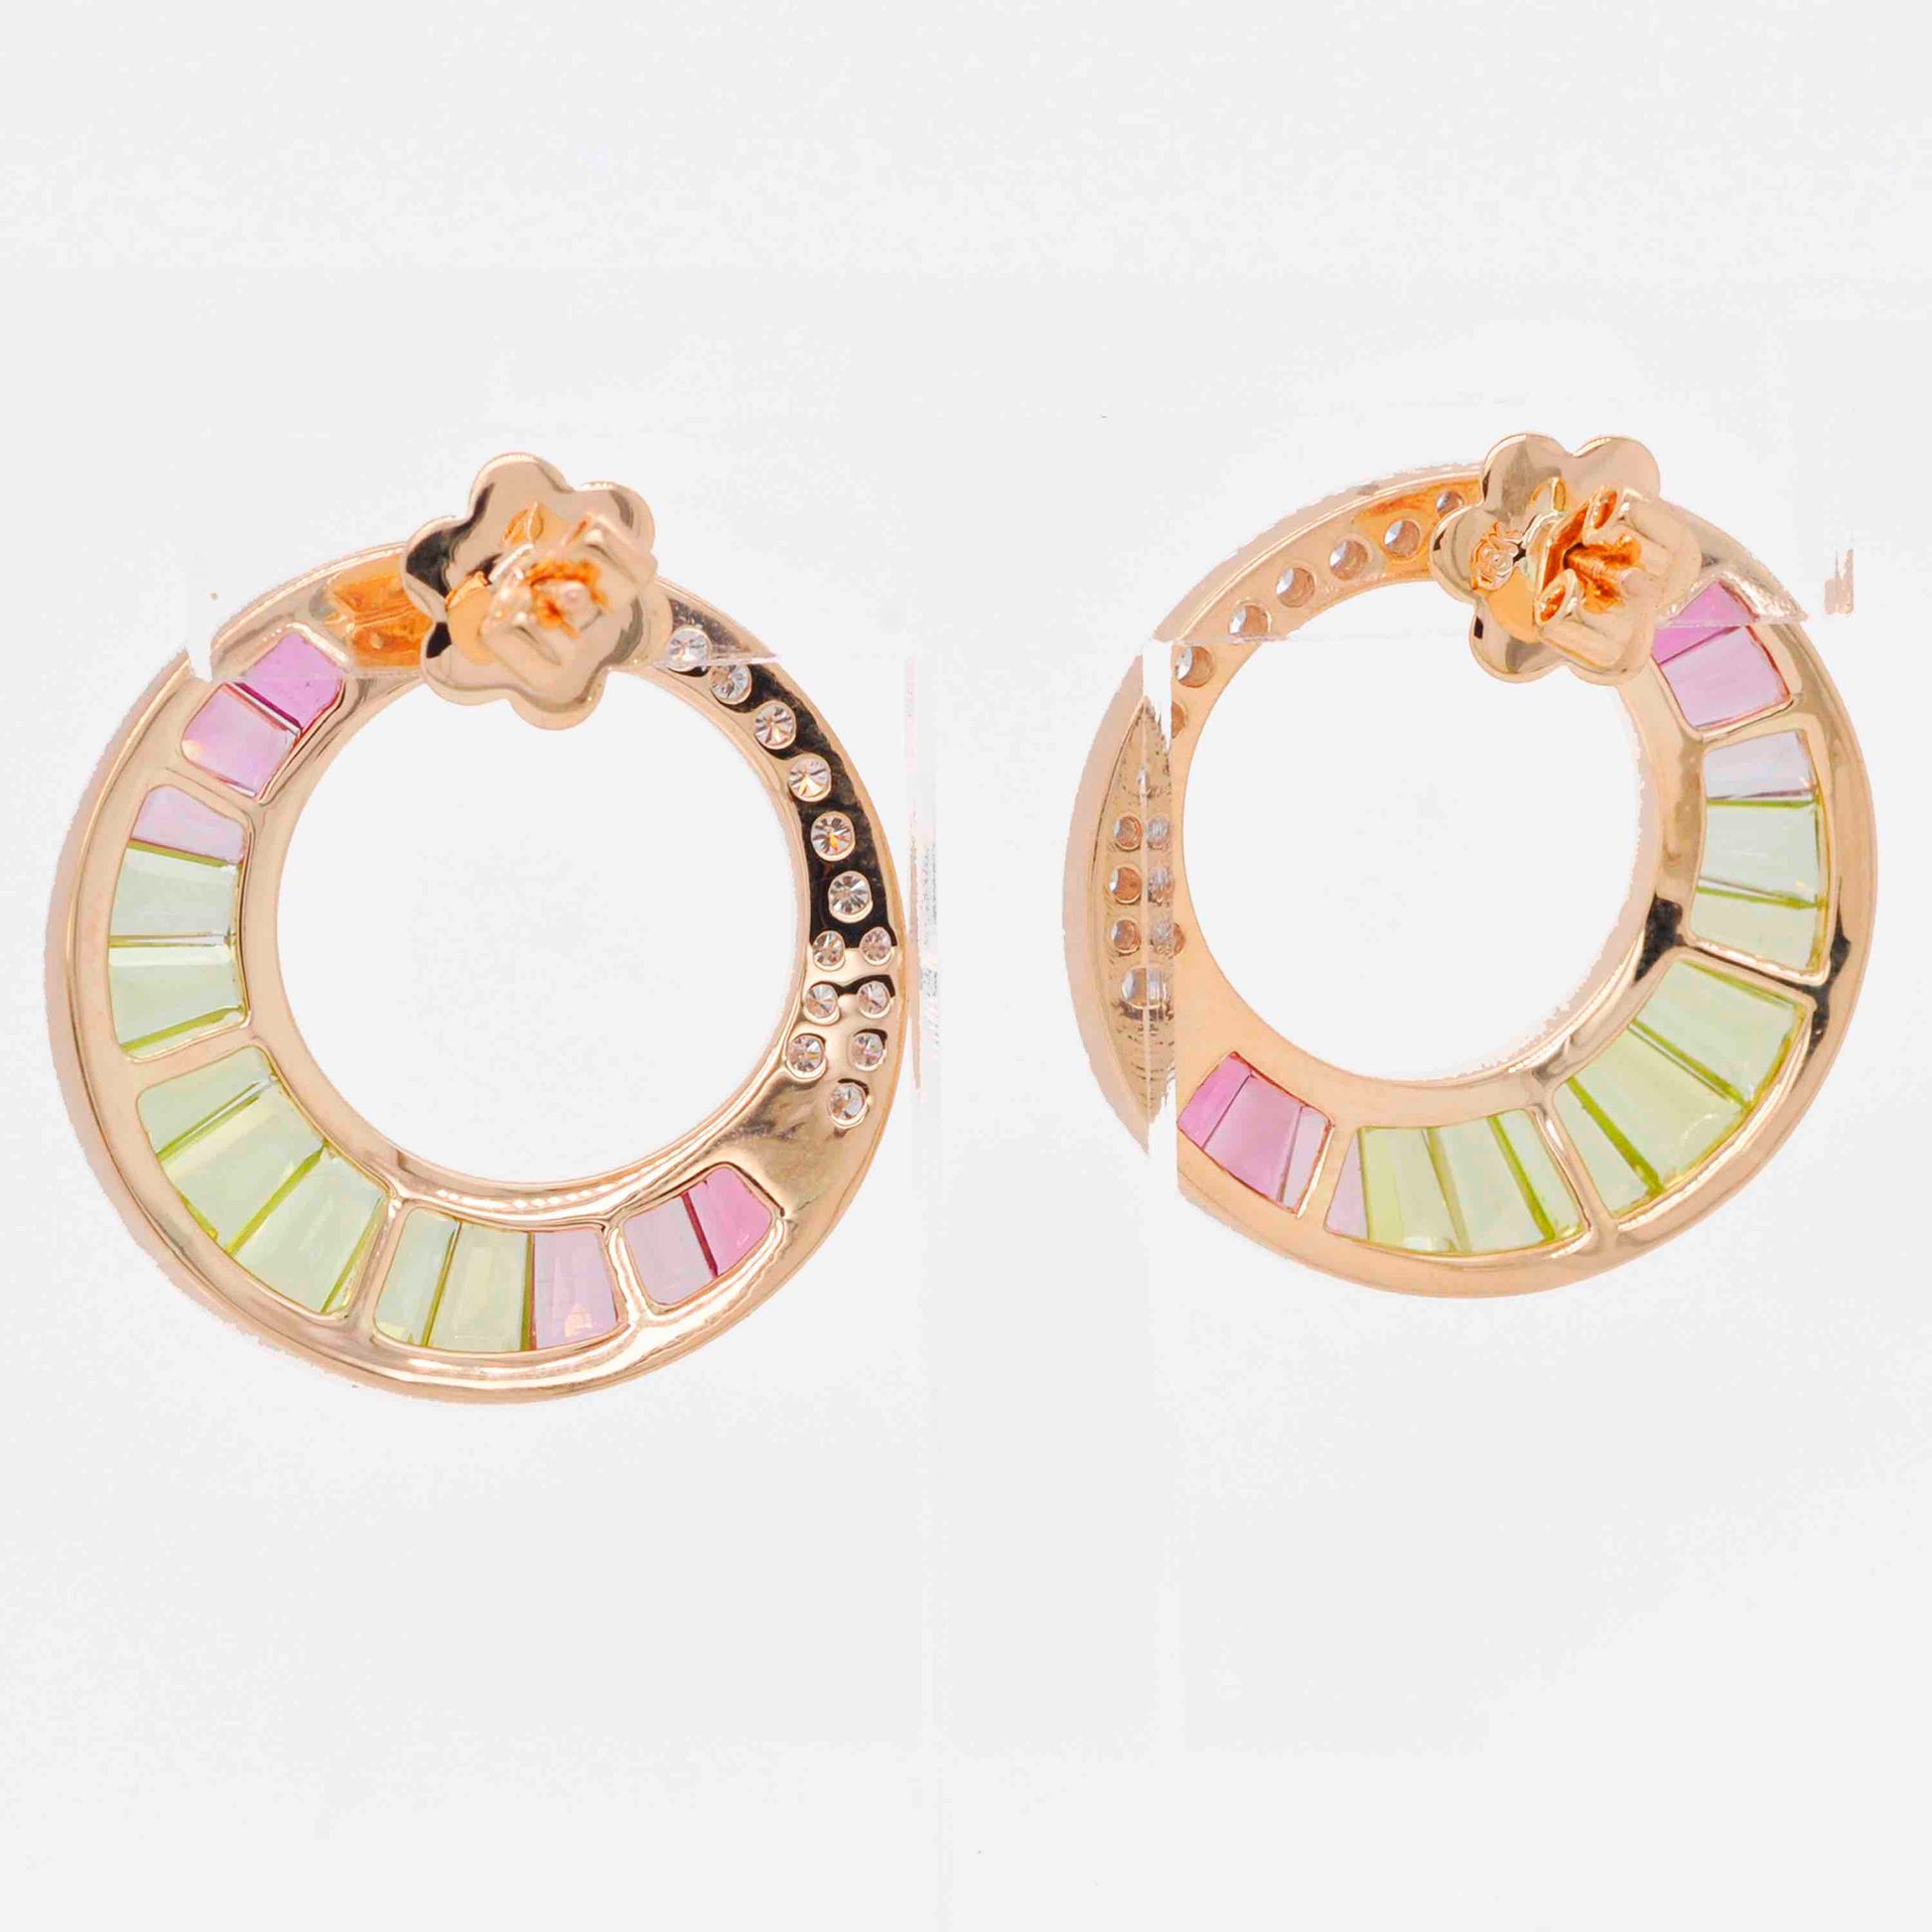 18K Gold Cleopatra Channel-Set Peridot Pink Tourmaline Stud Earrings - Vaibhav Dhadda Jewelry